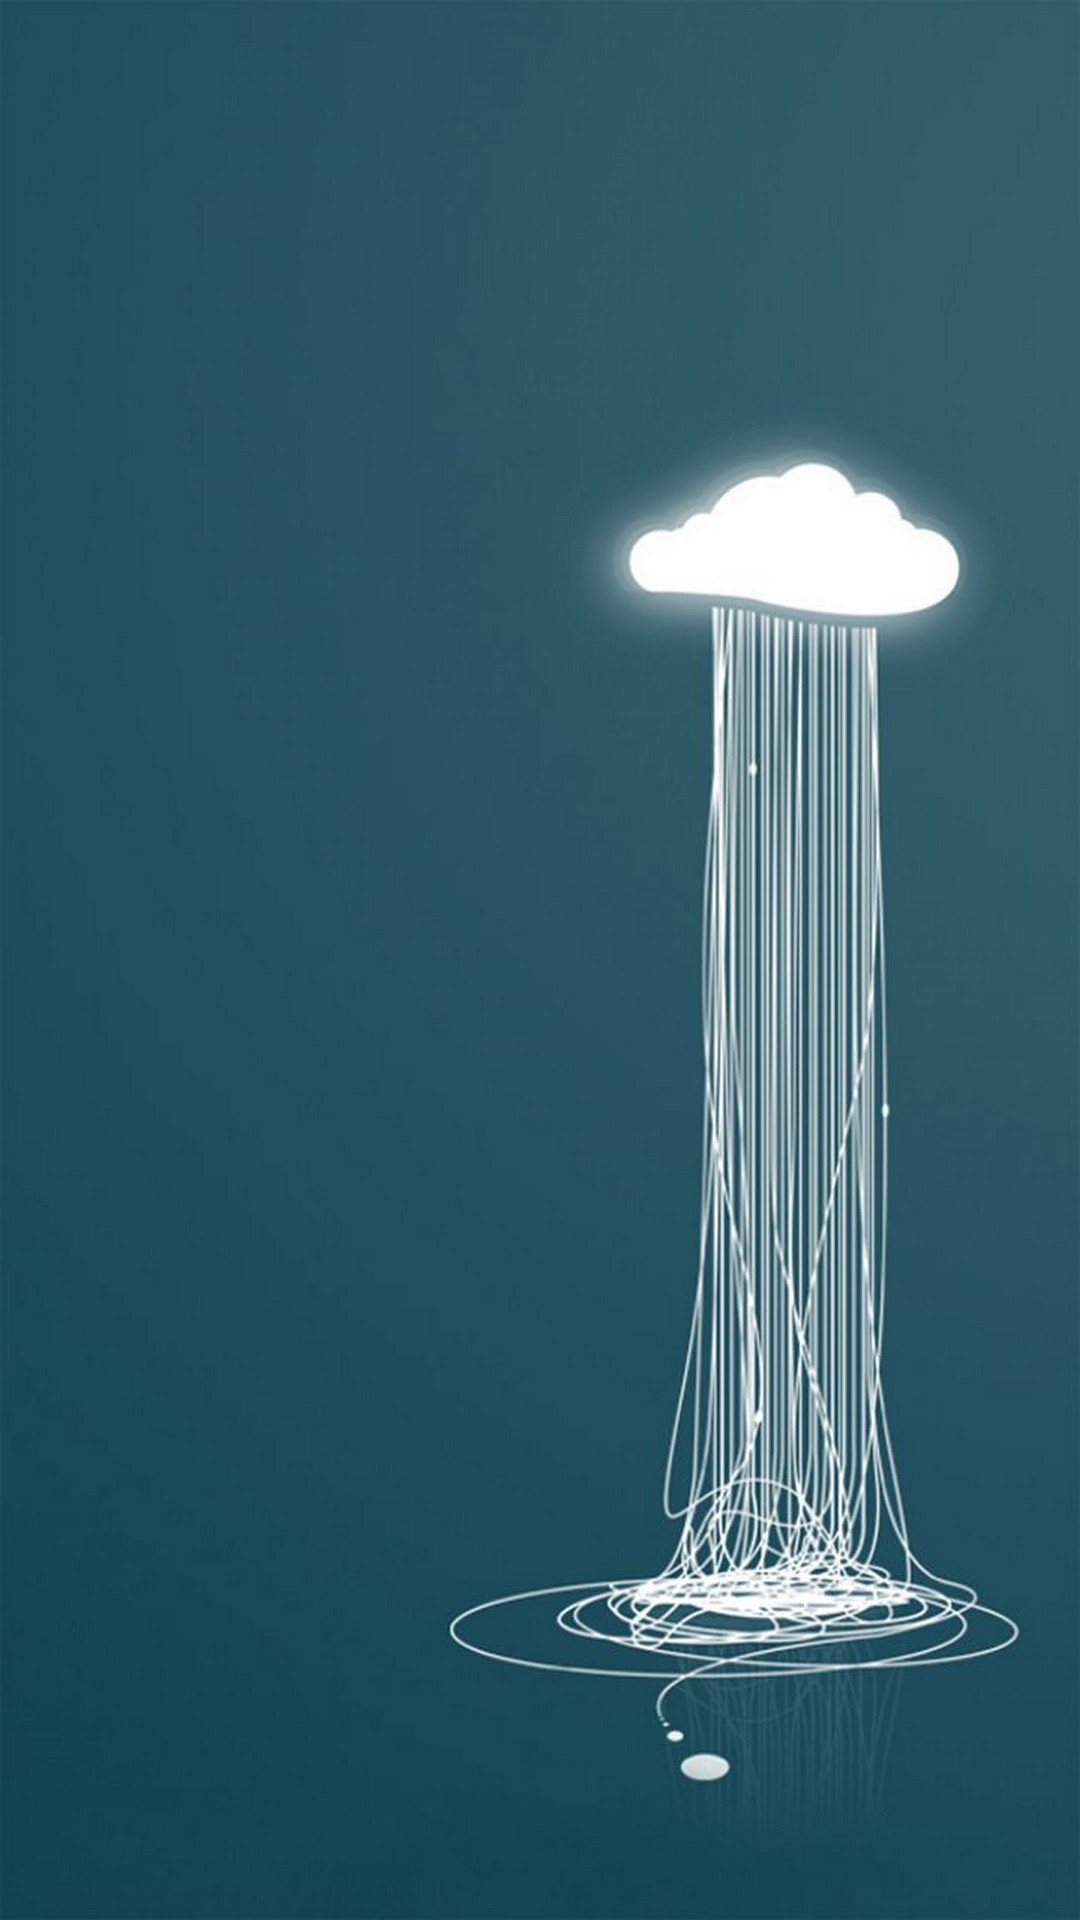 Wallpaper Animated Rain iPhone resolution 1080x1920